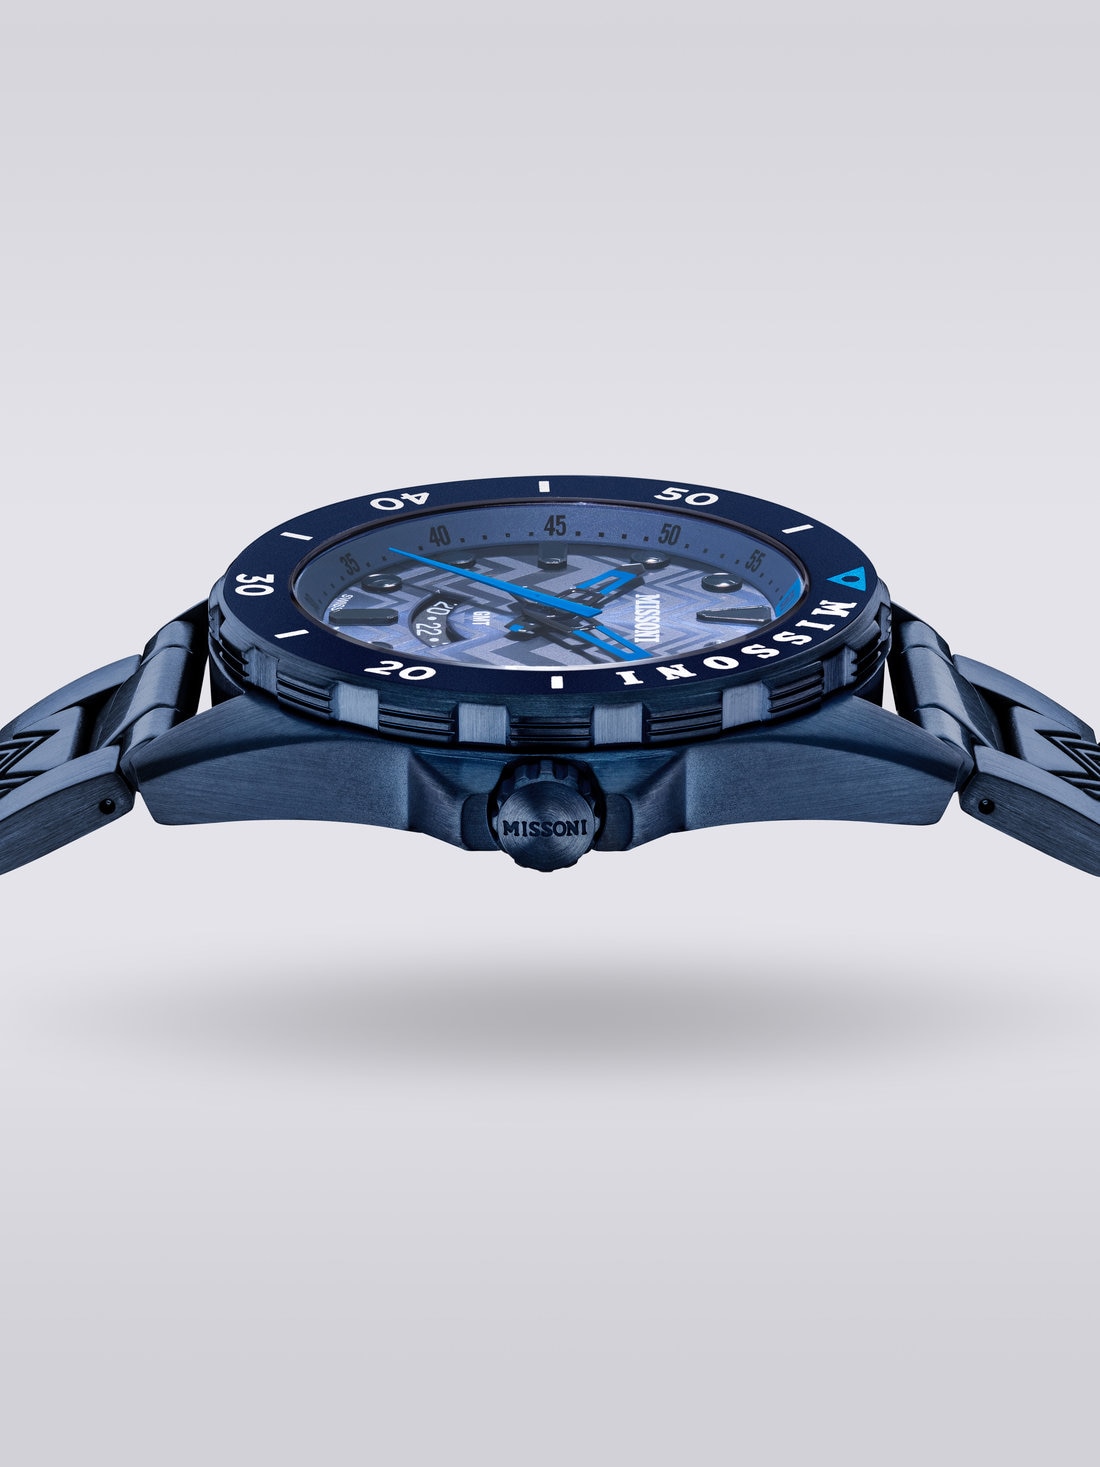 Missoni Gmt 43mm  watch , Blue - 8051575781834 - 3